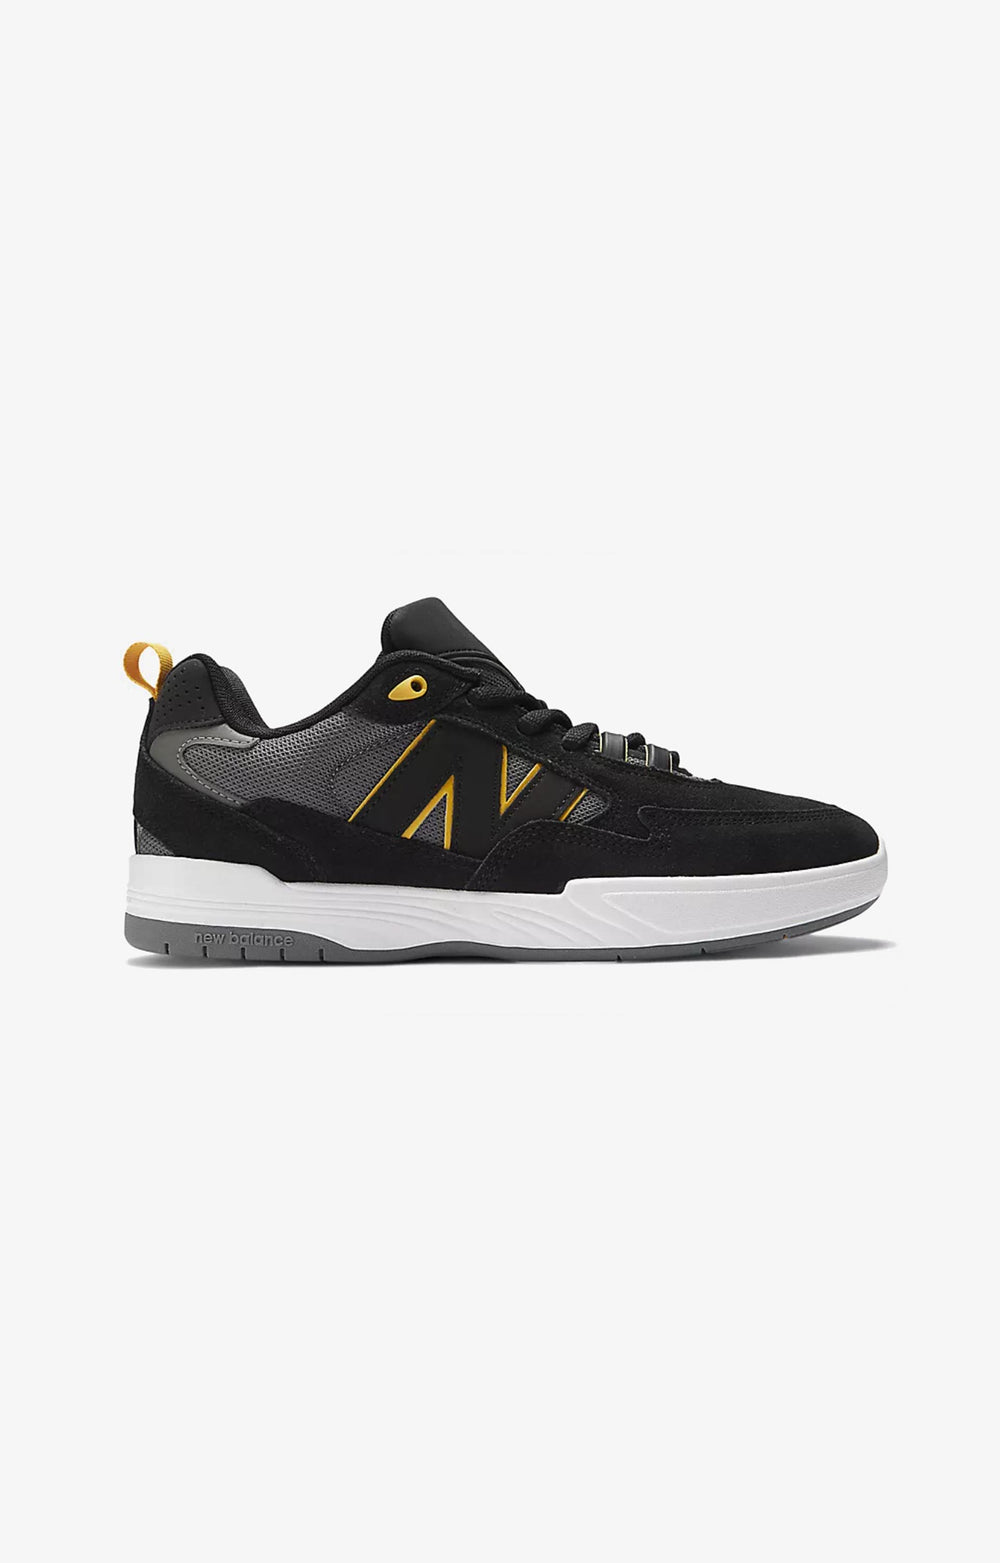 New Balance Numeric Tiago Lemos NM808WUT Shoe, Black/Yellow